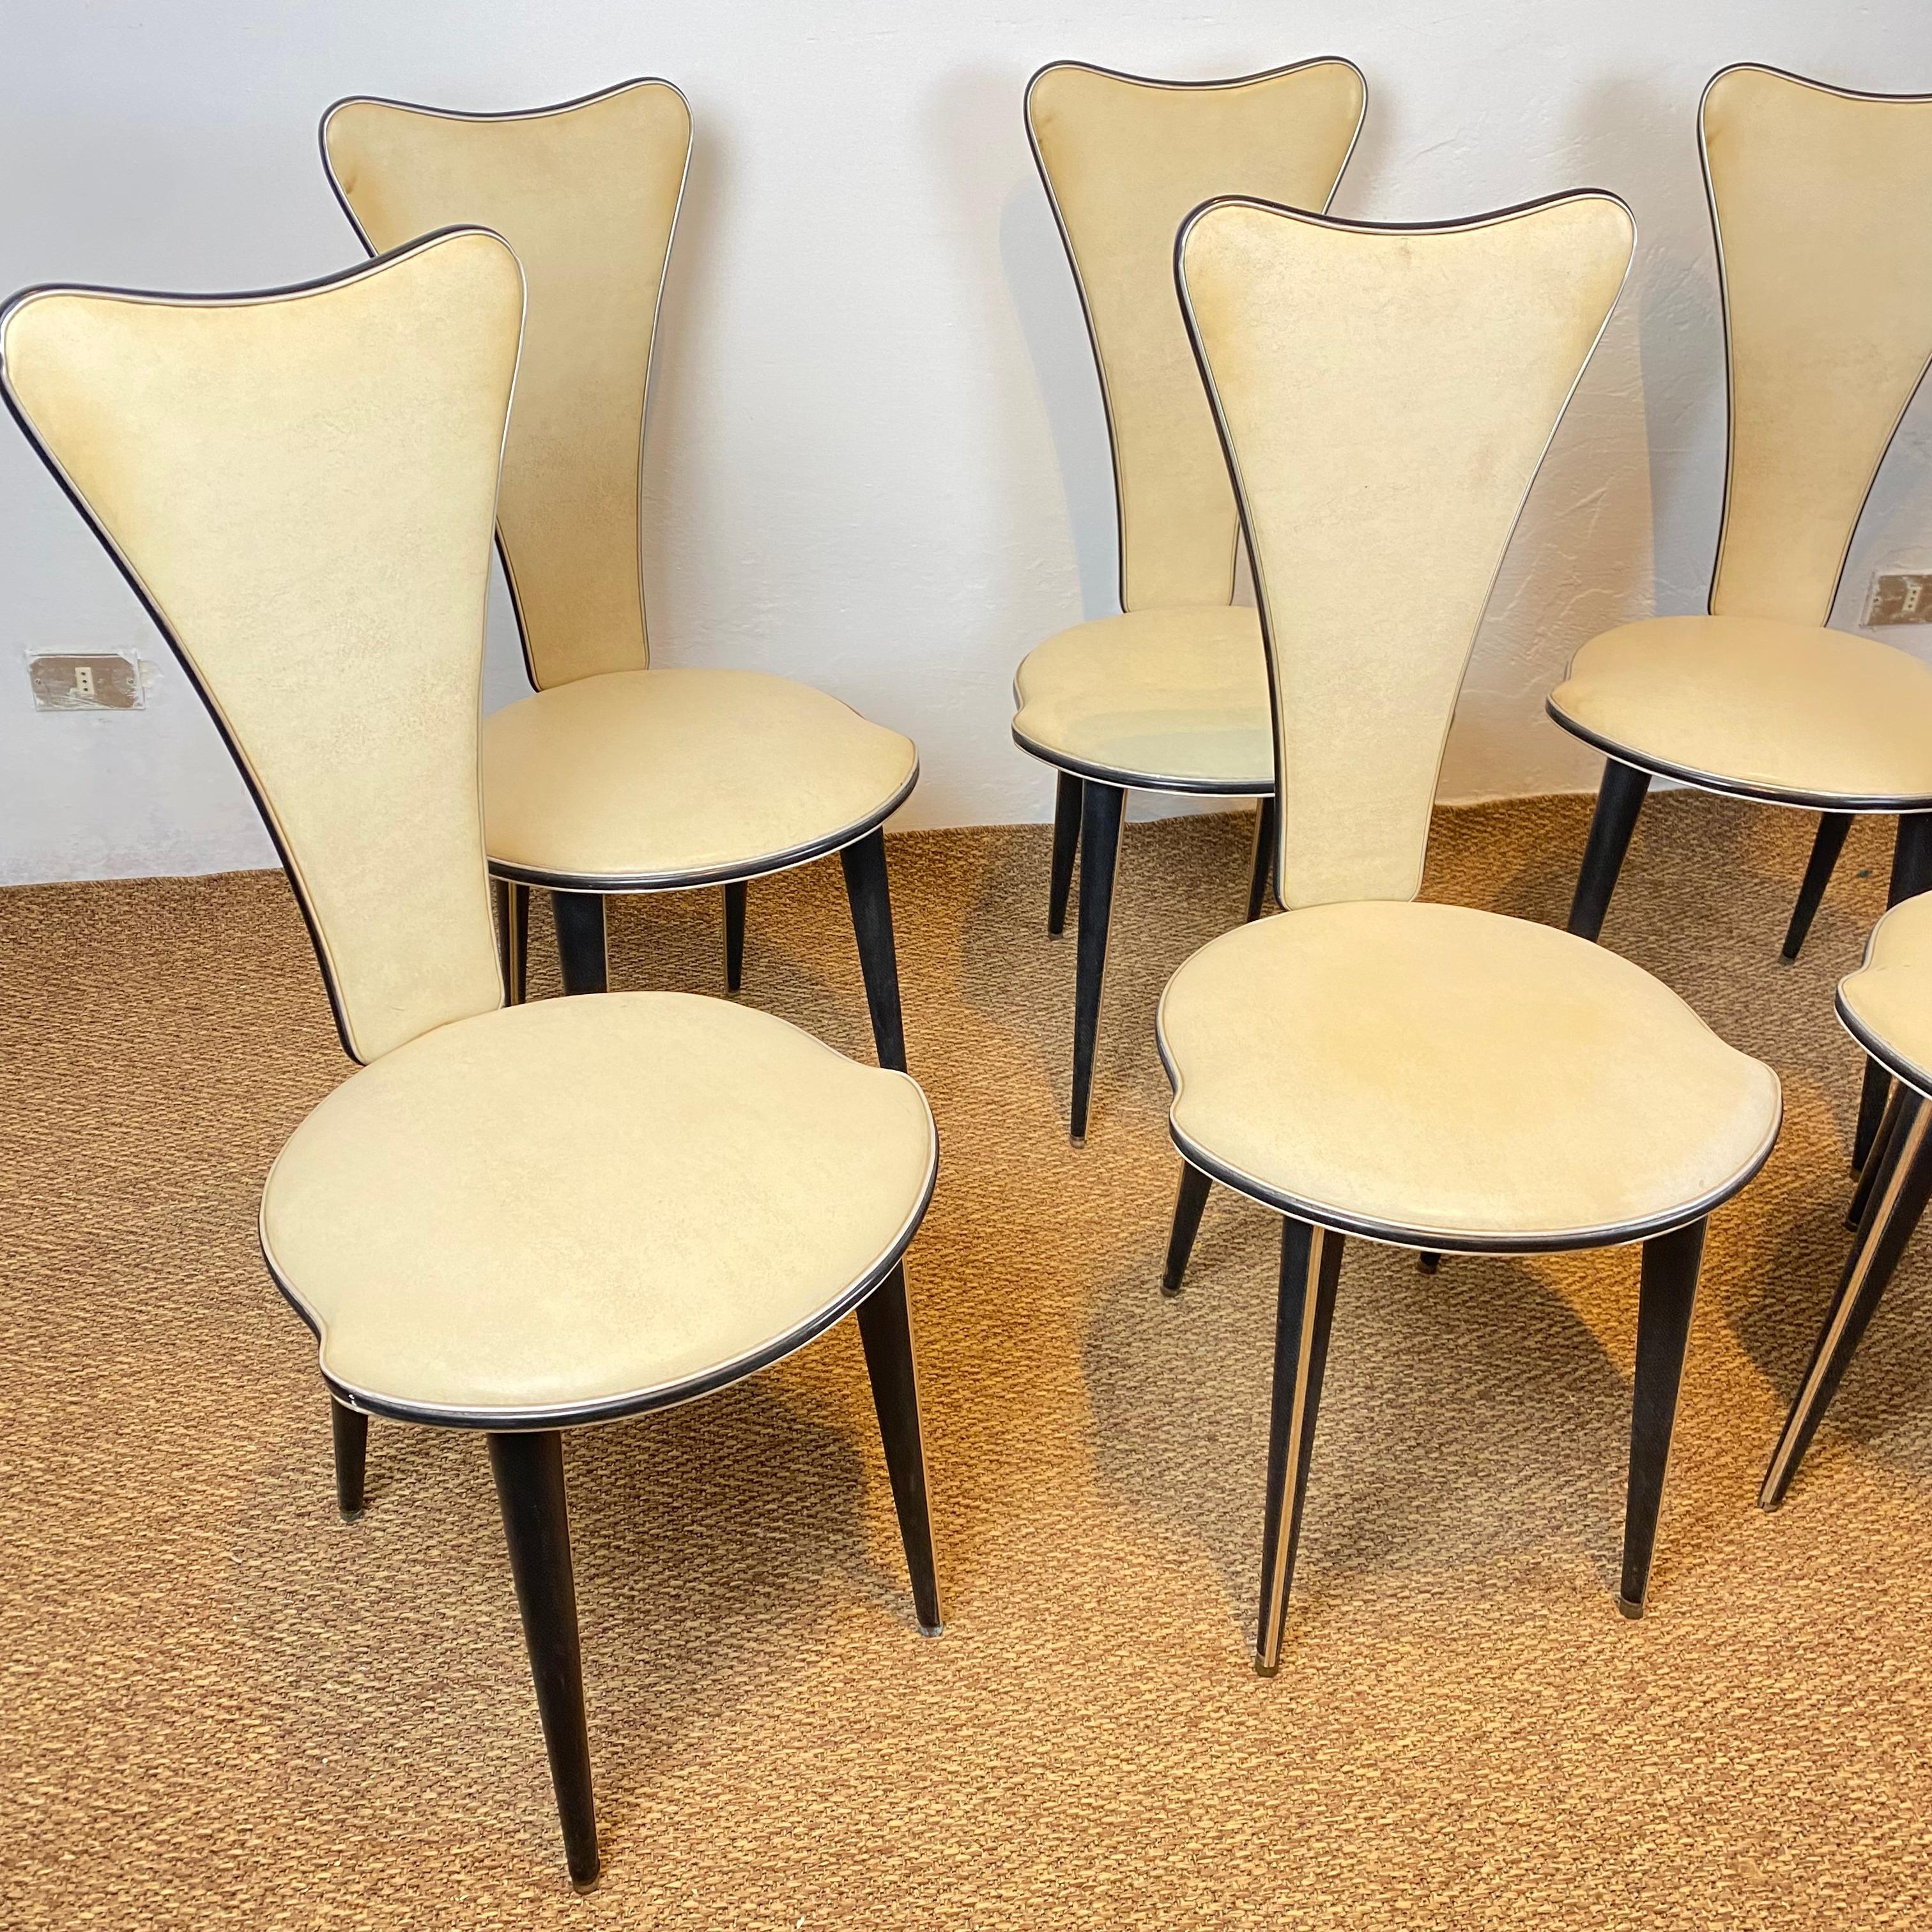 Italian Set of Six Chairs by Umberto Mascagni, 1950s